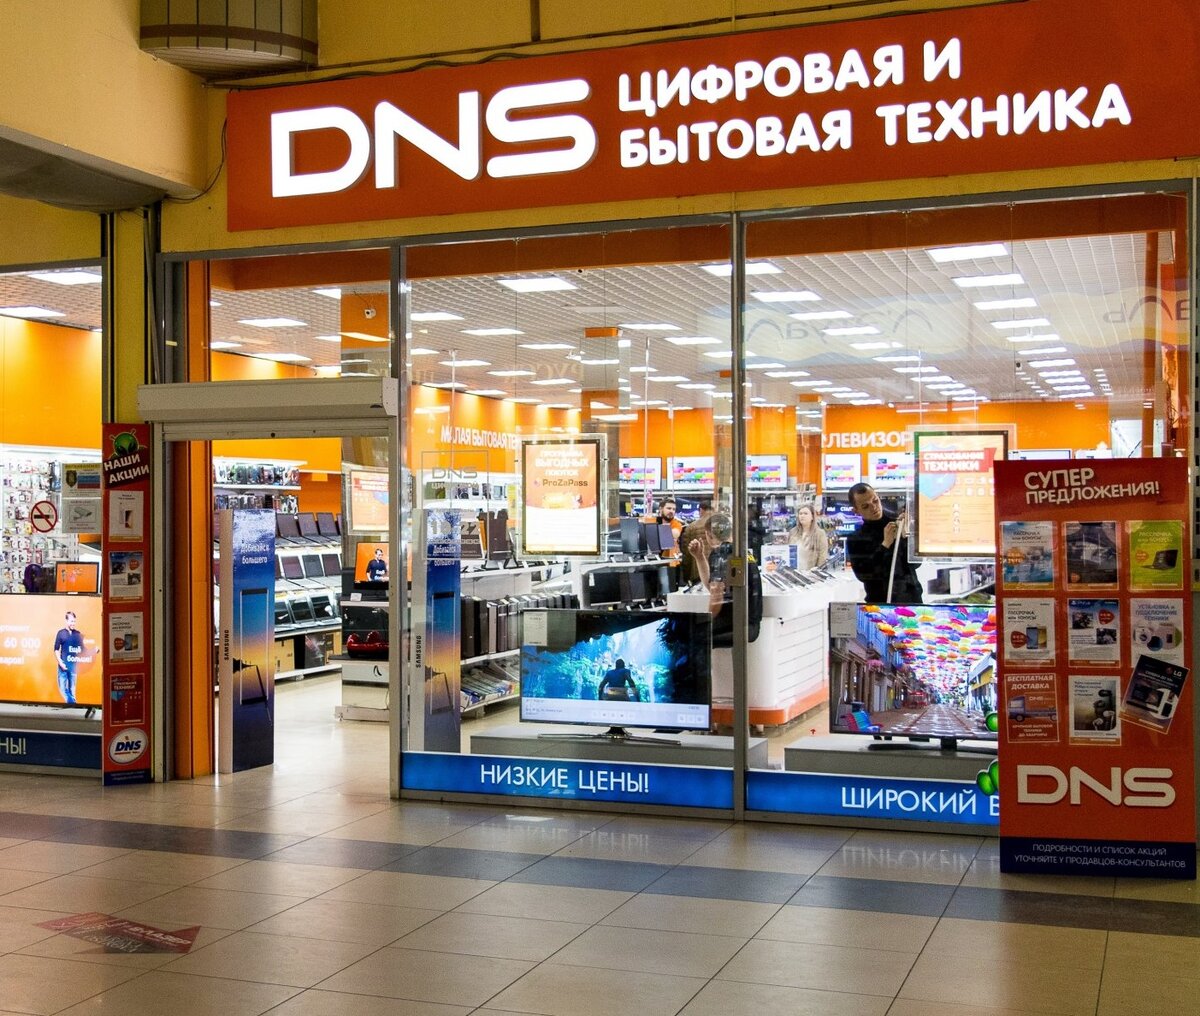 Сайт техники днс. ДНС. DNS цифровая и бытовая техника. Магазин ДНС. ДНС Ритейл.